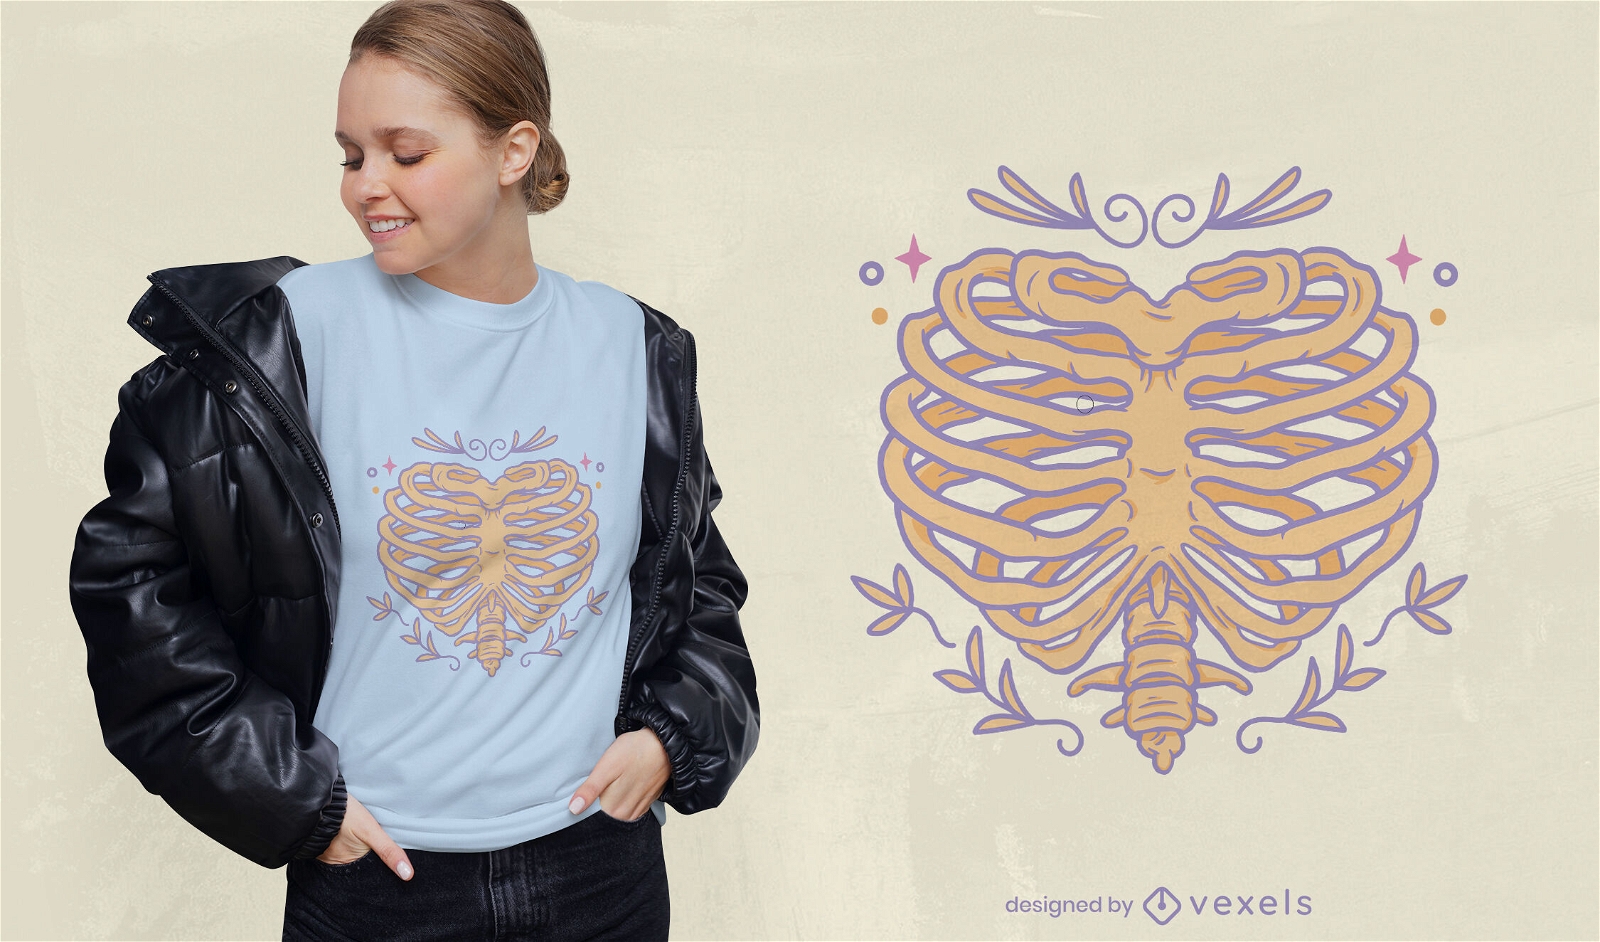 Human rib cage heart t-shirt design